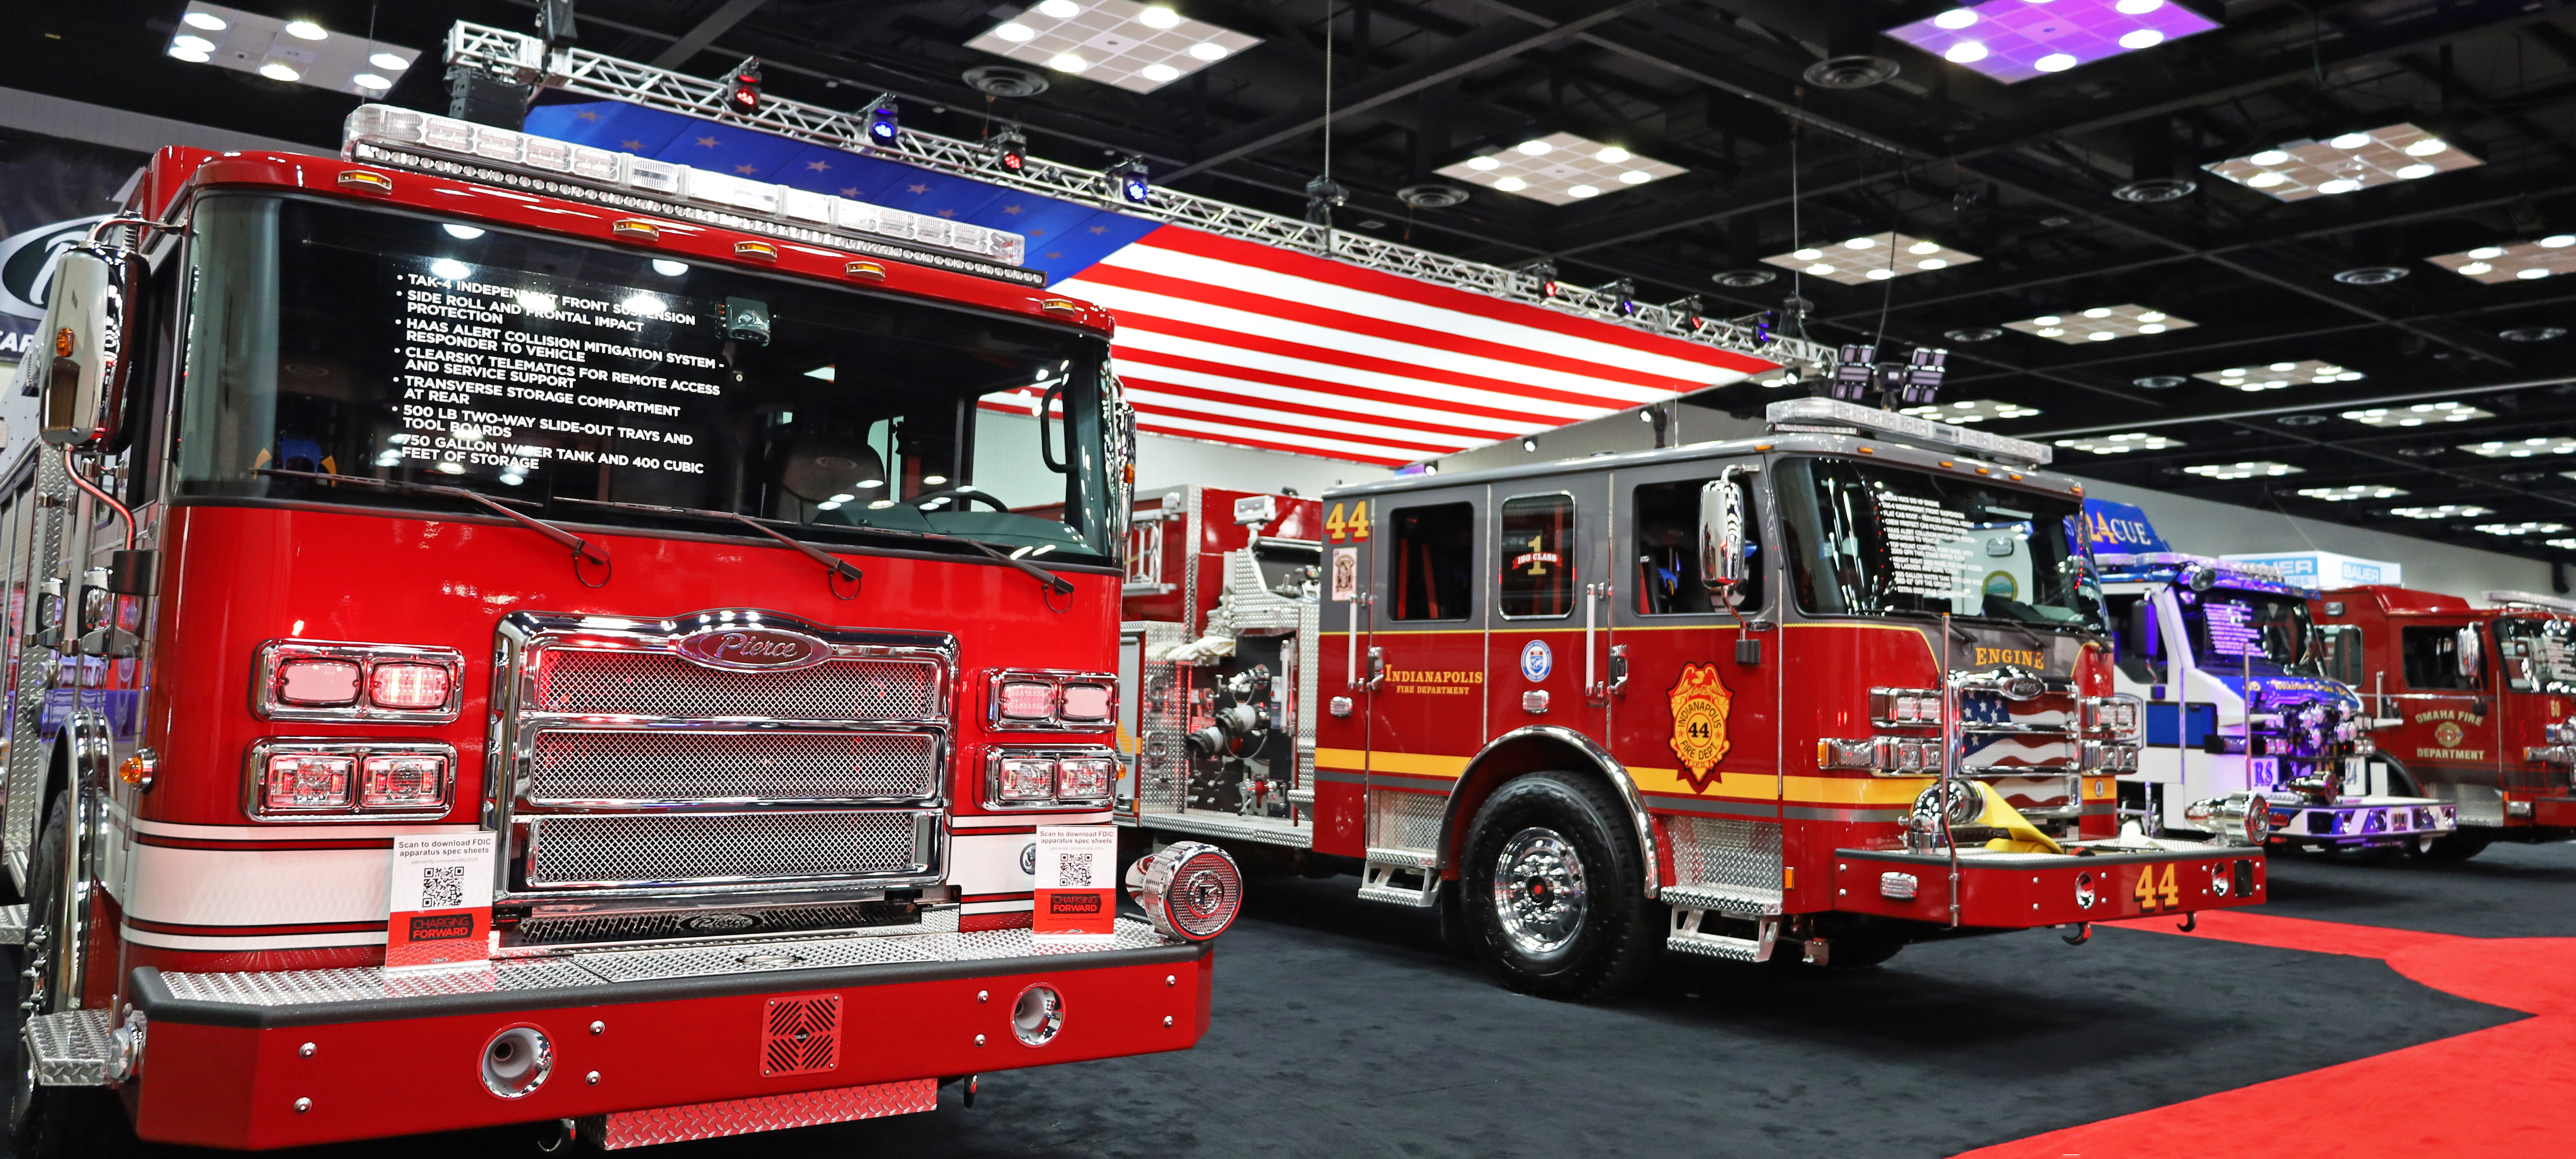 Pierce Manufacturing Fire Trucks on Trade Show Floor